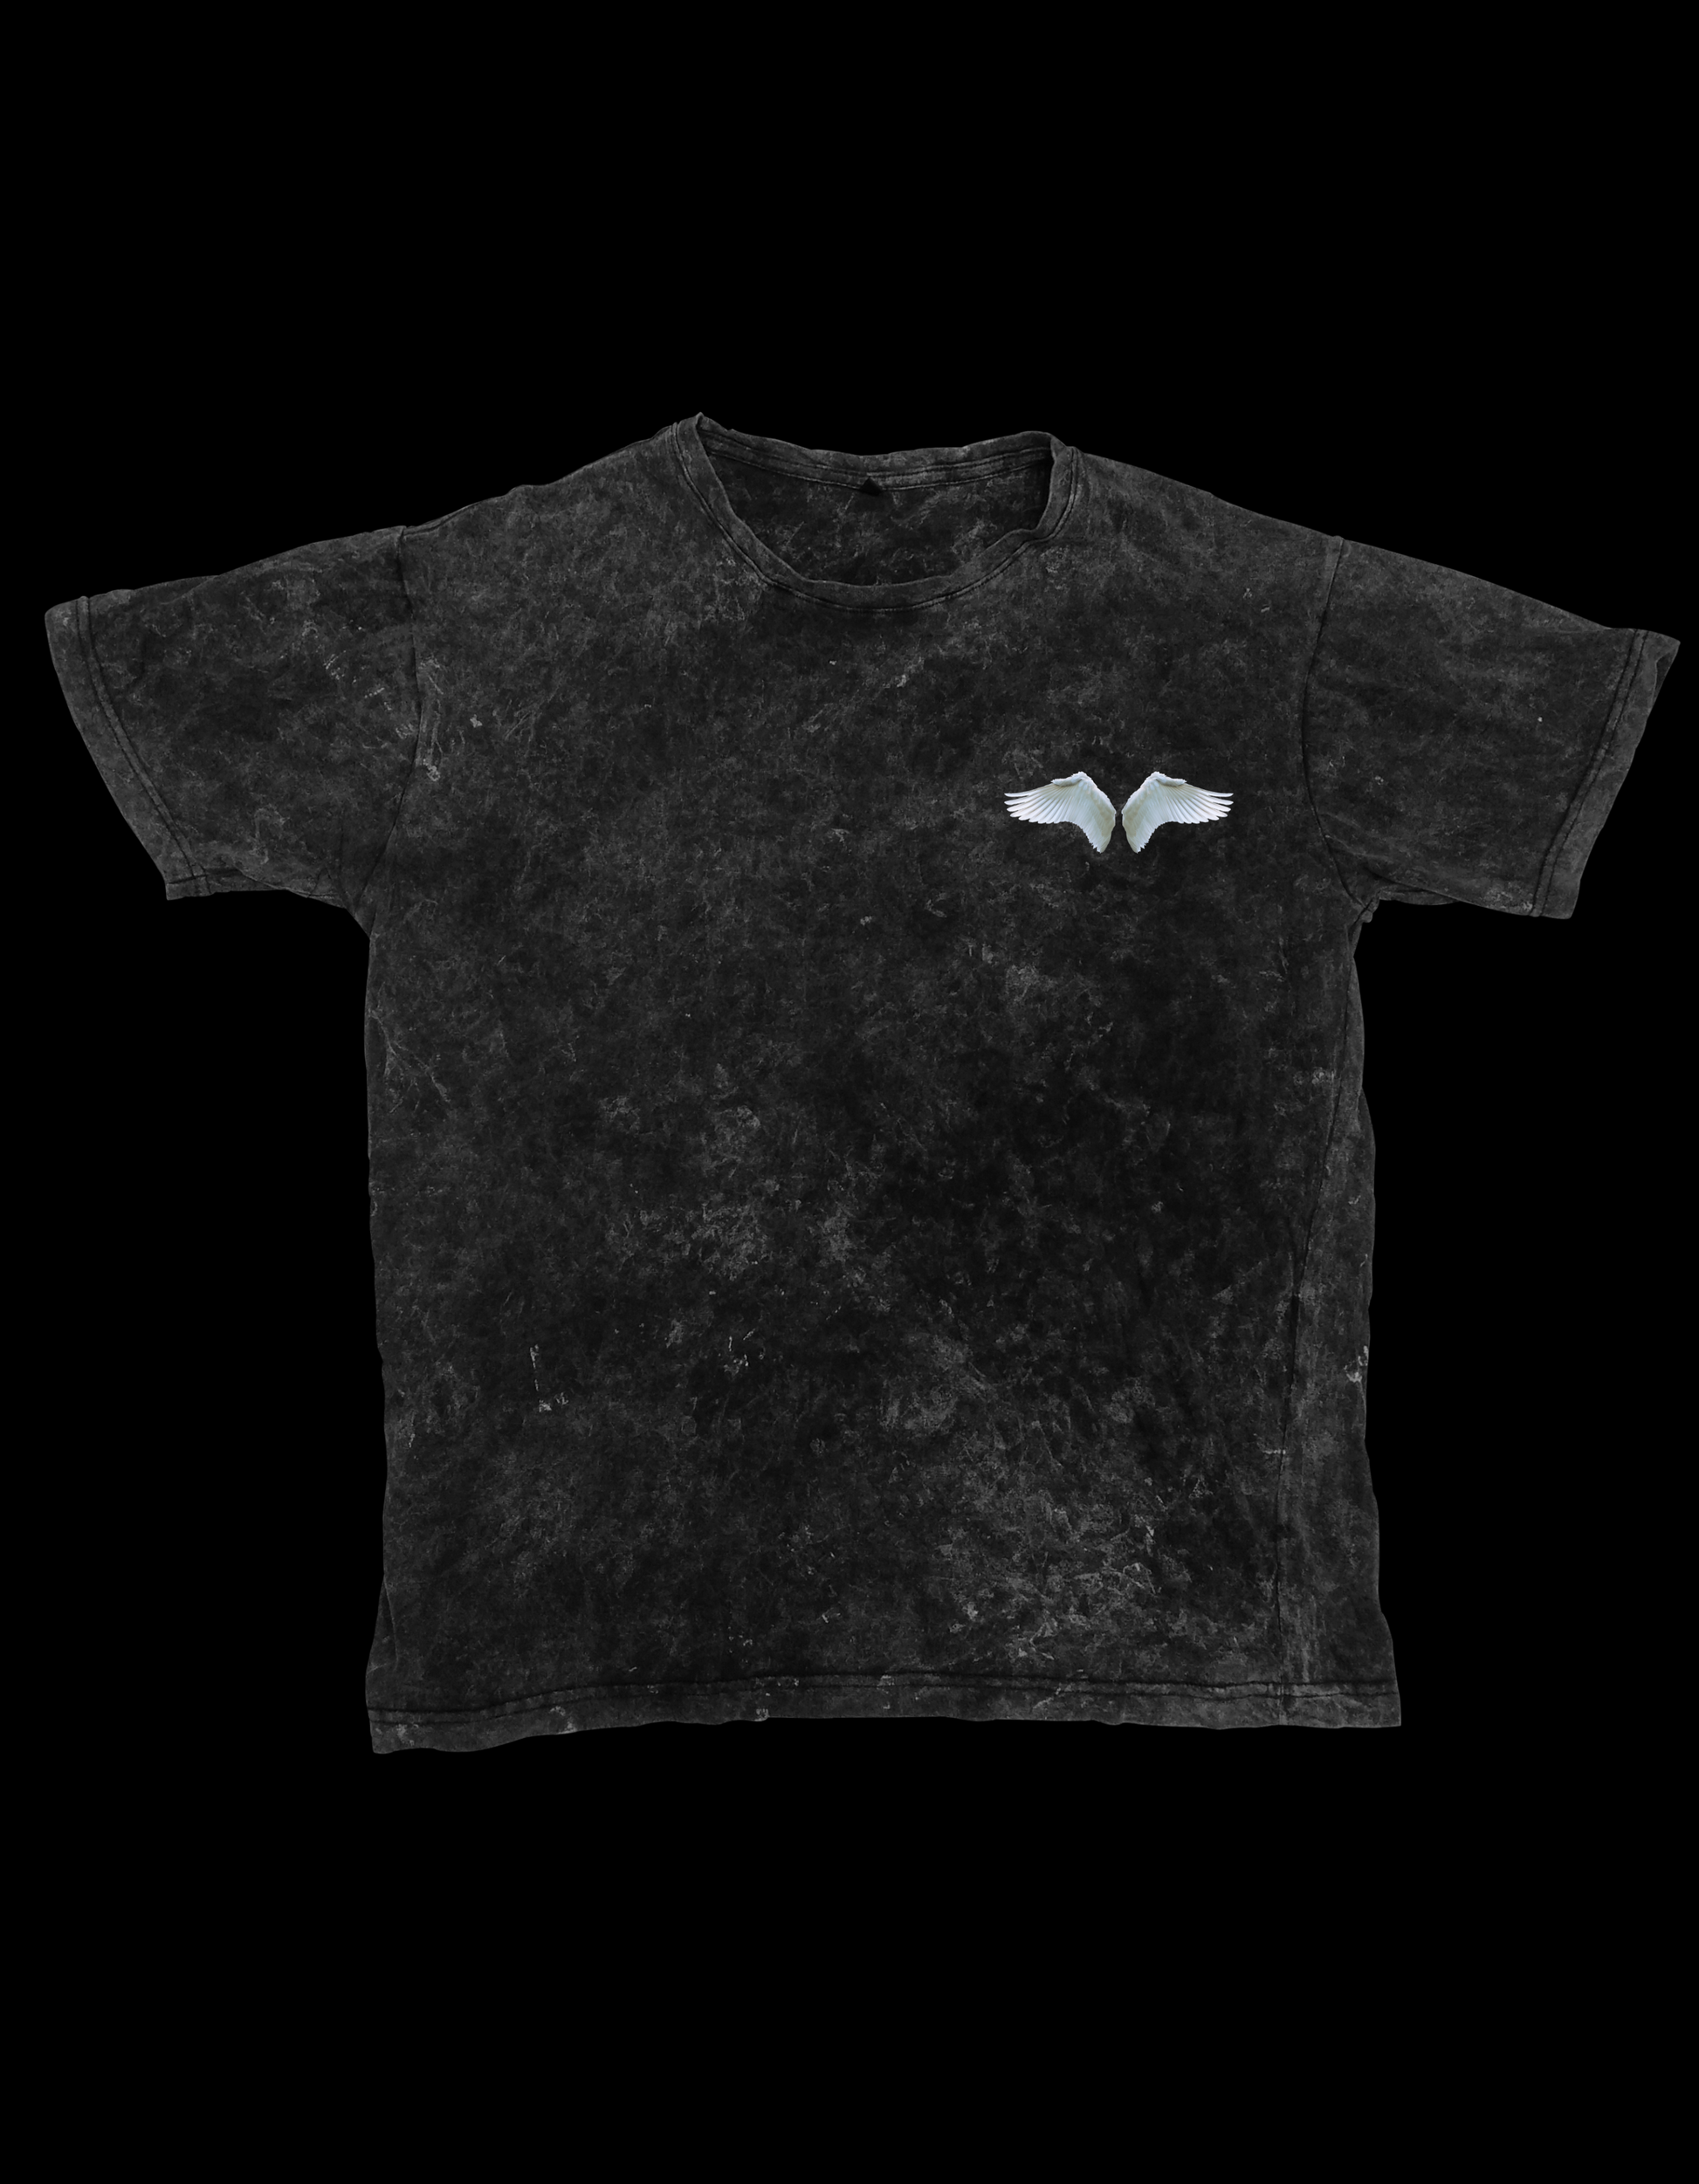 Unisex acid wash grey t-shirt with faded effect